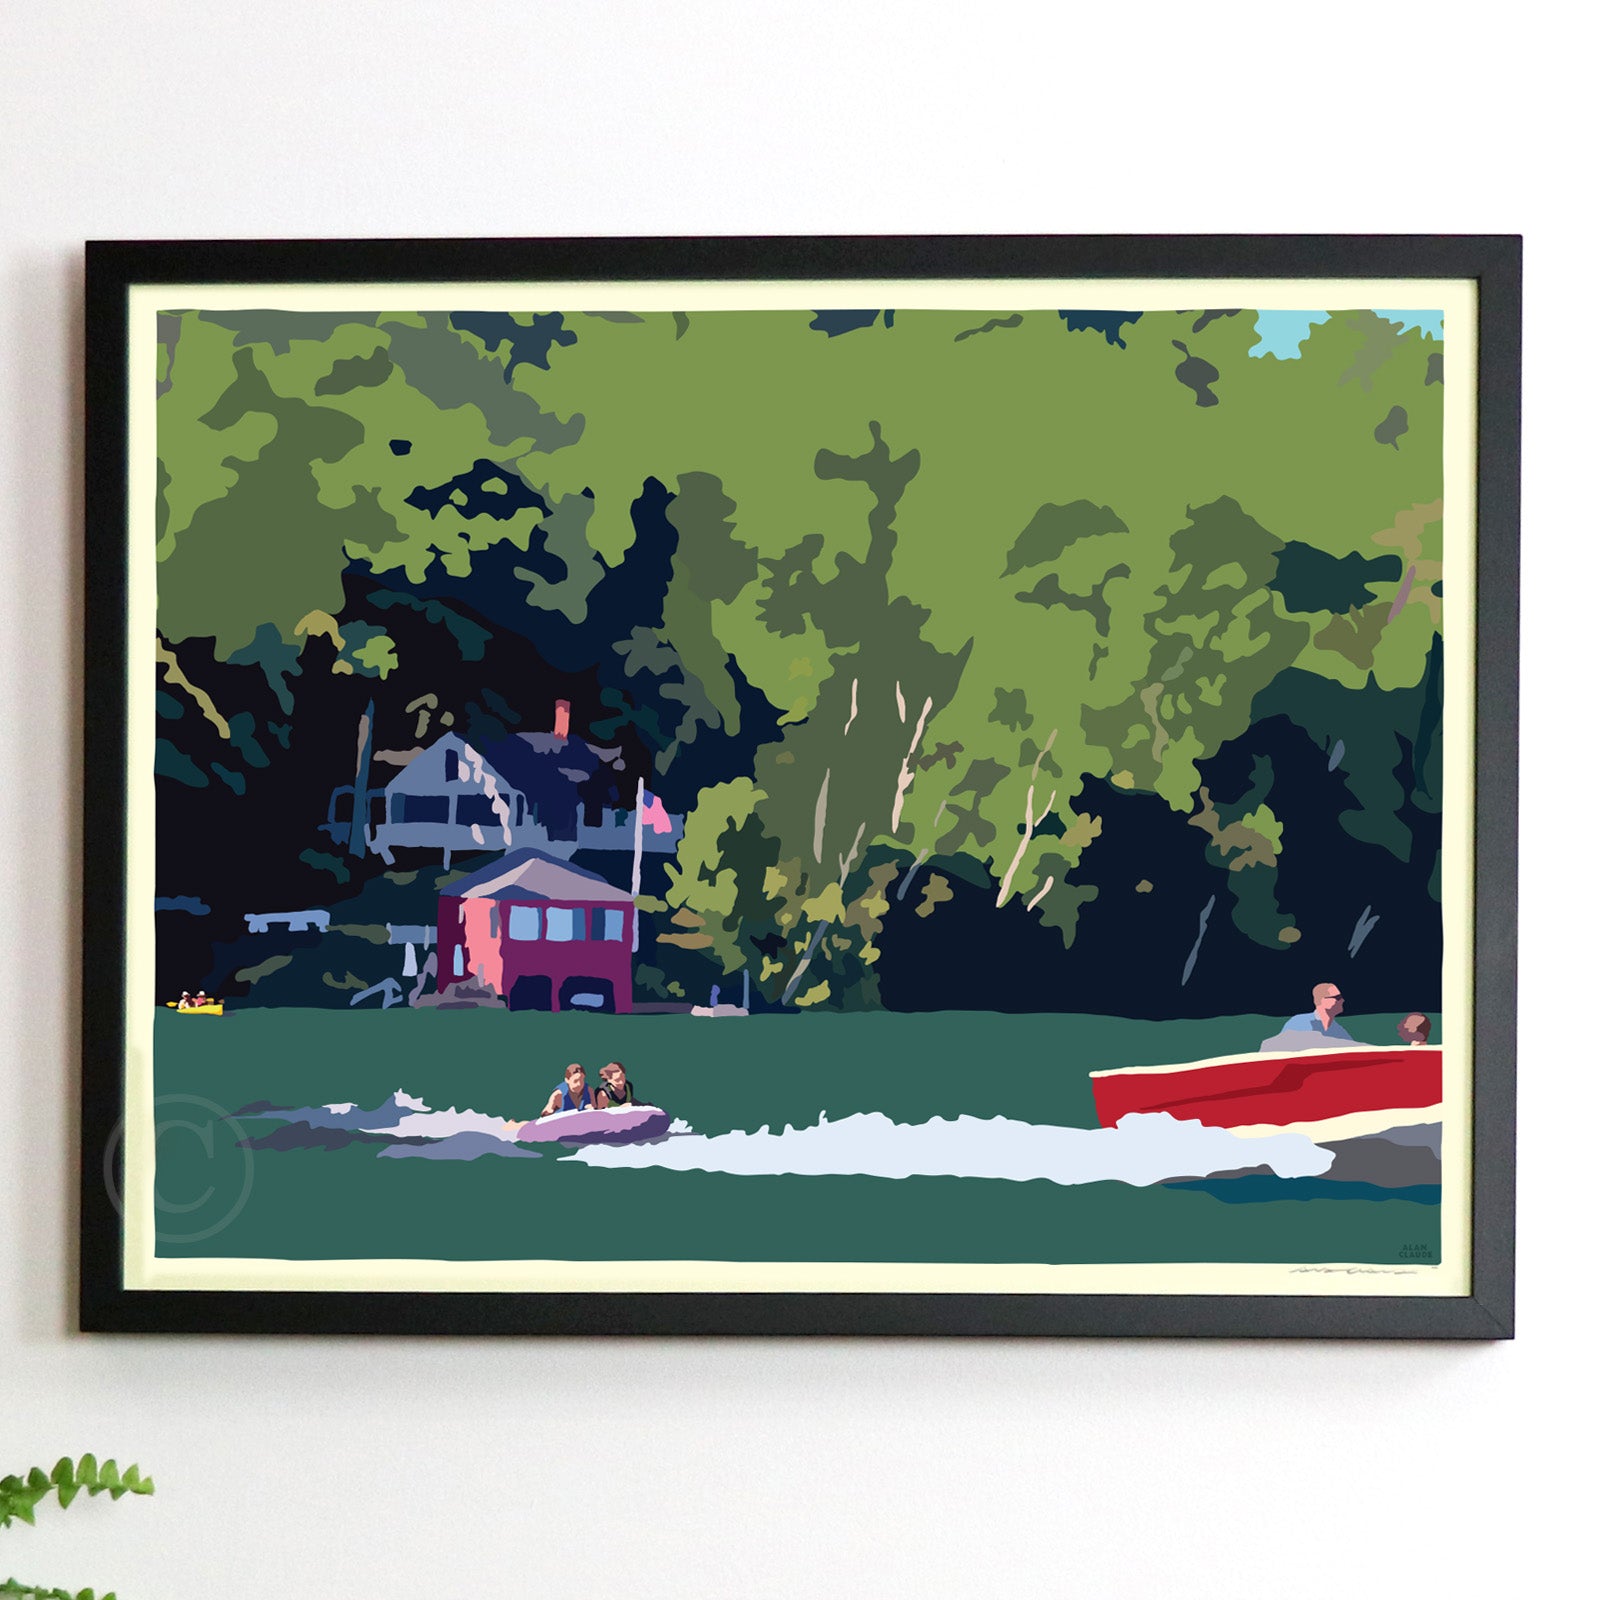 Tubing on a Lake Art Print 18" x 24" Horizontal Framed Wall Poster - Maine